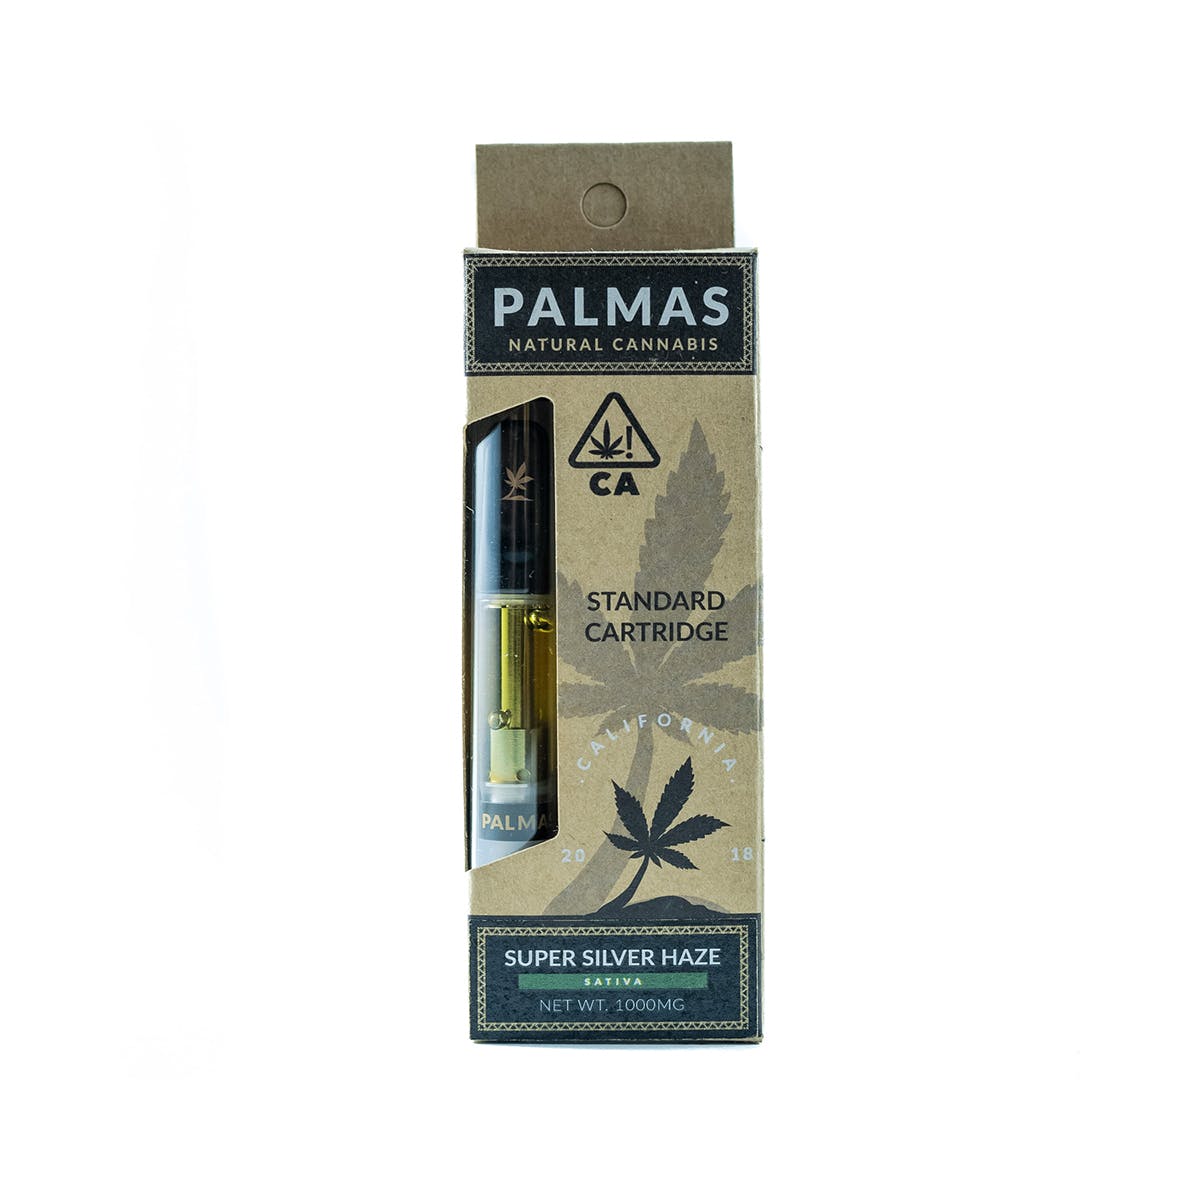 marijuana-dispensaries-true-20-in-los-angeles-palmas-standard-cartridge-super-silver-haze